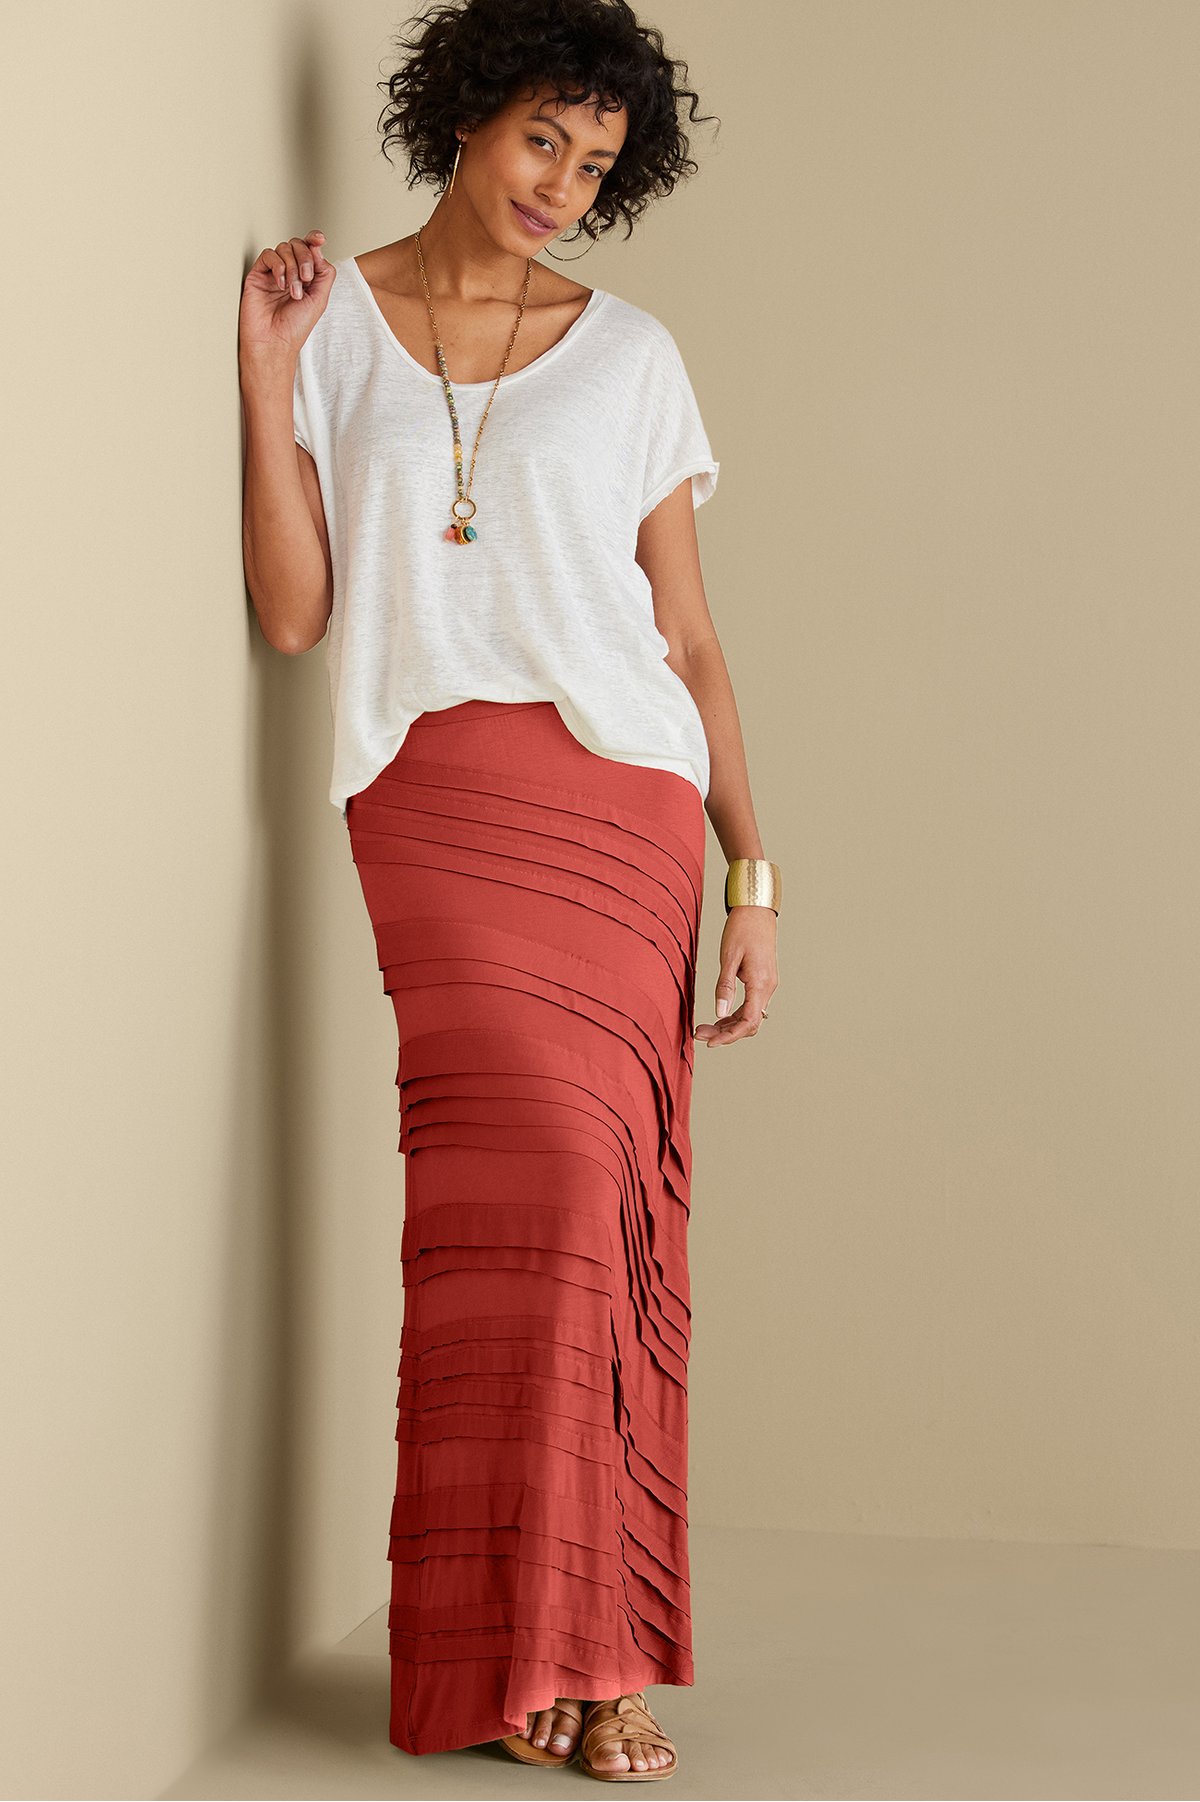 Women's Rosemary Skirt by Soft Surroundings, in Red Ochre size XL (18)